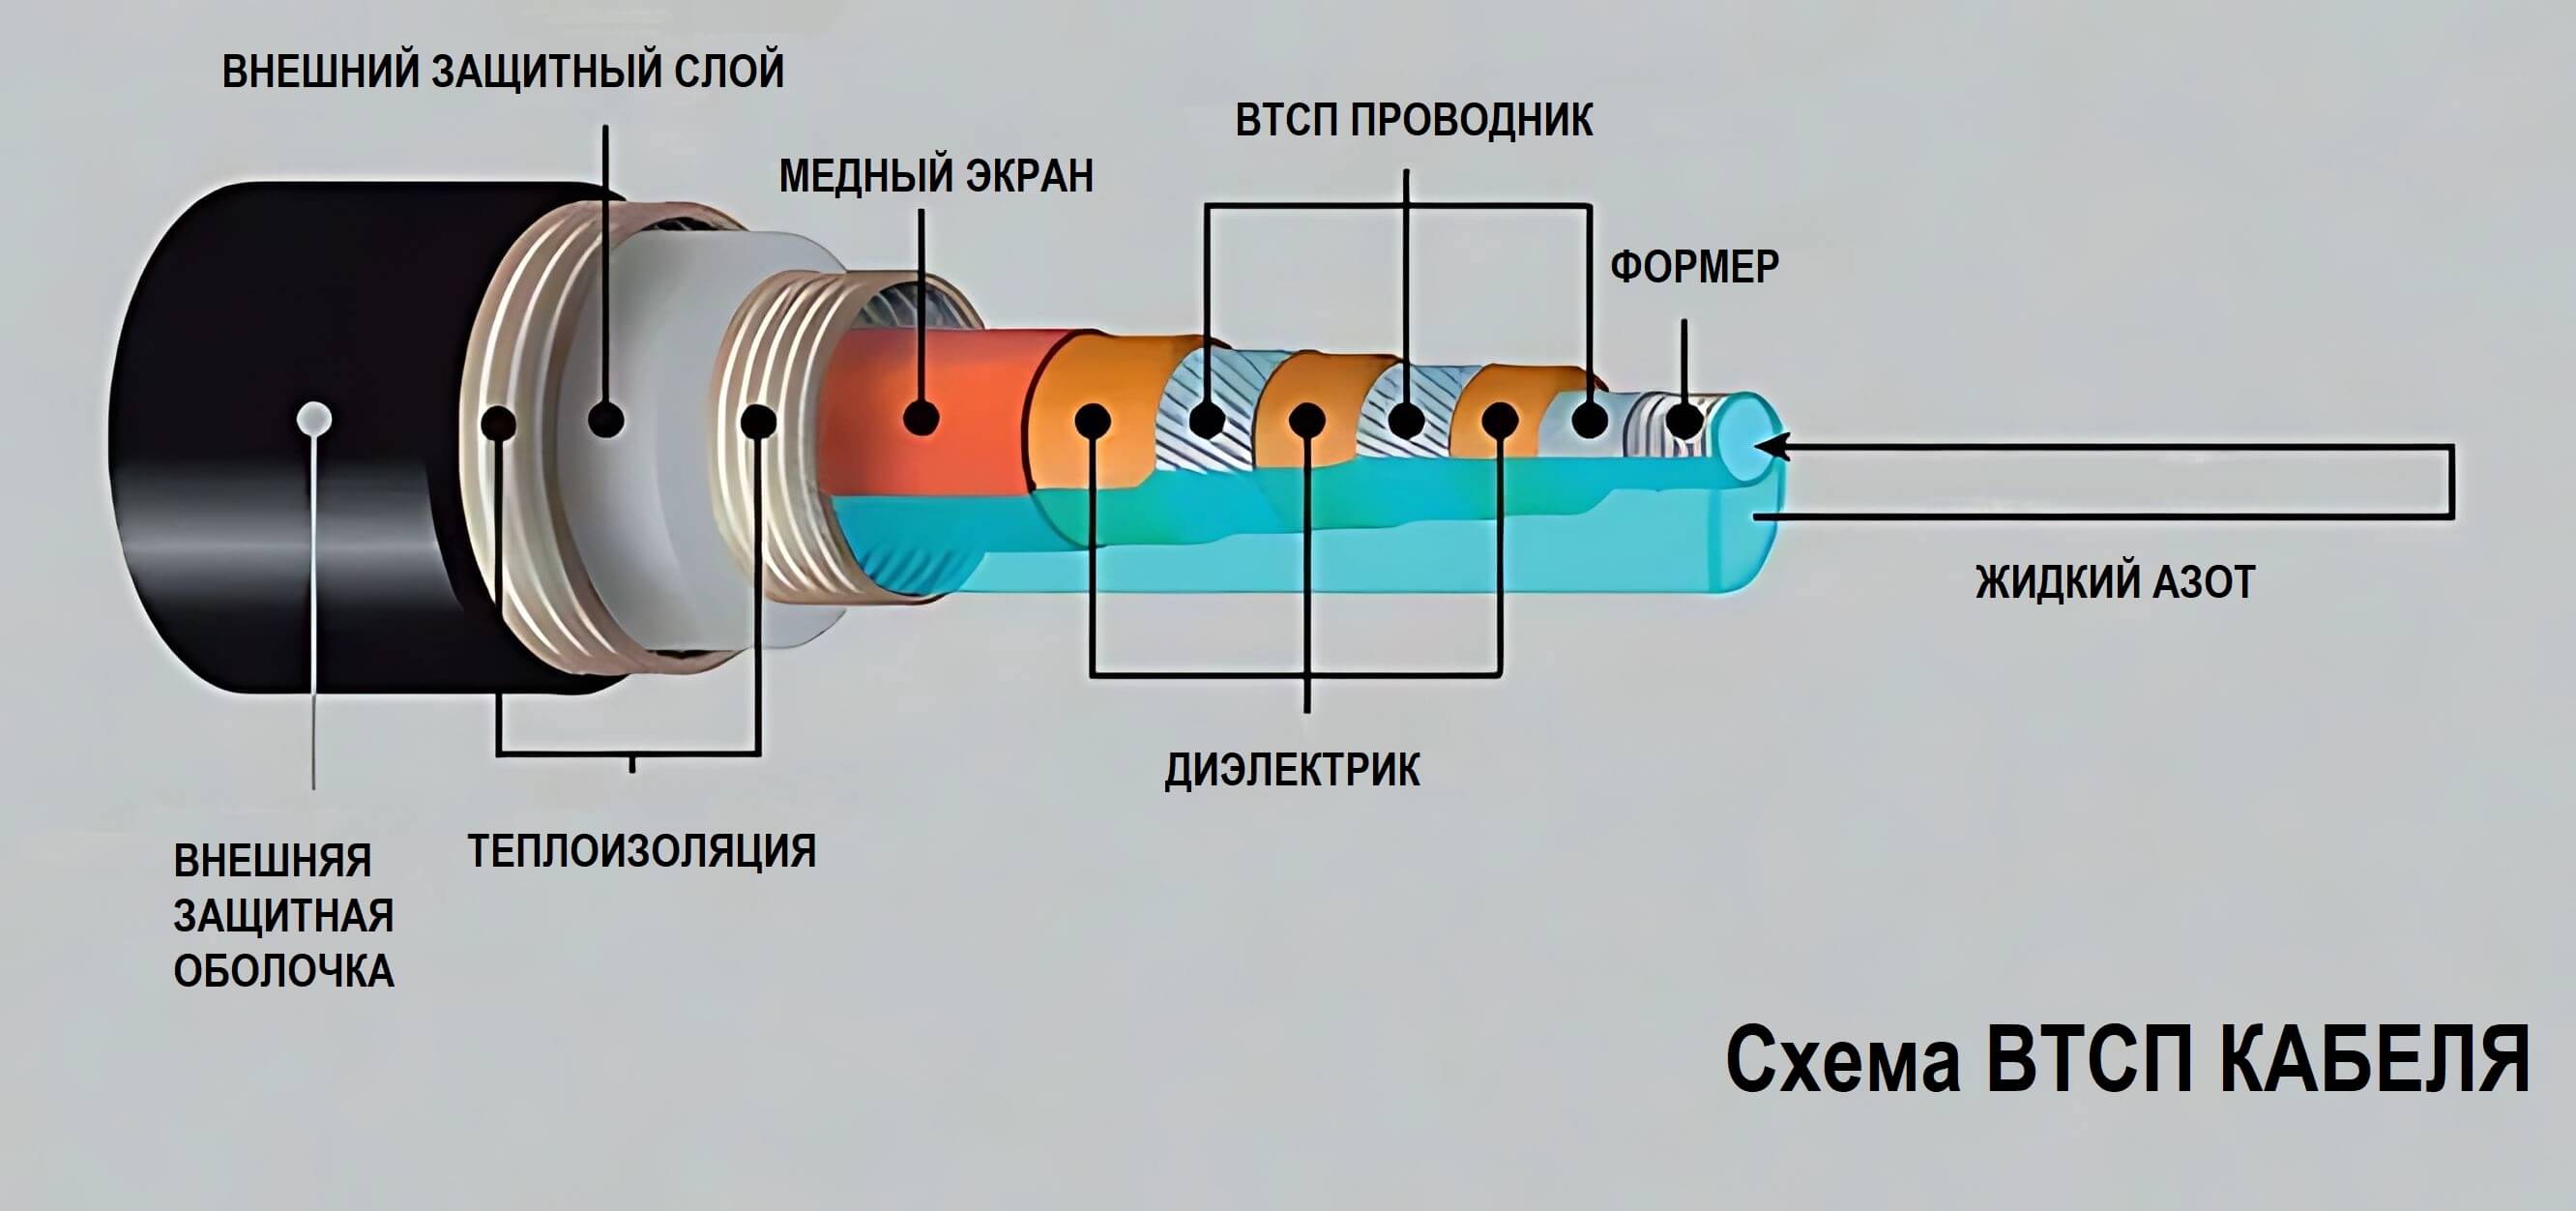 Схема ВТСП кабеля